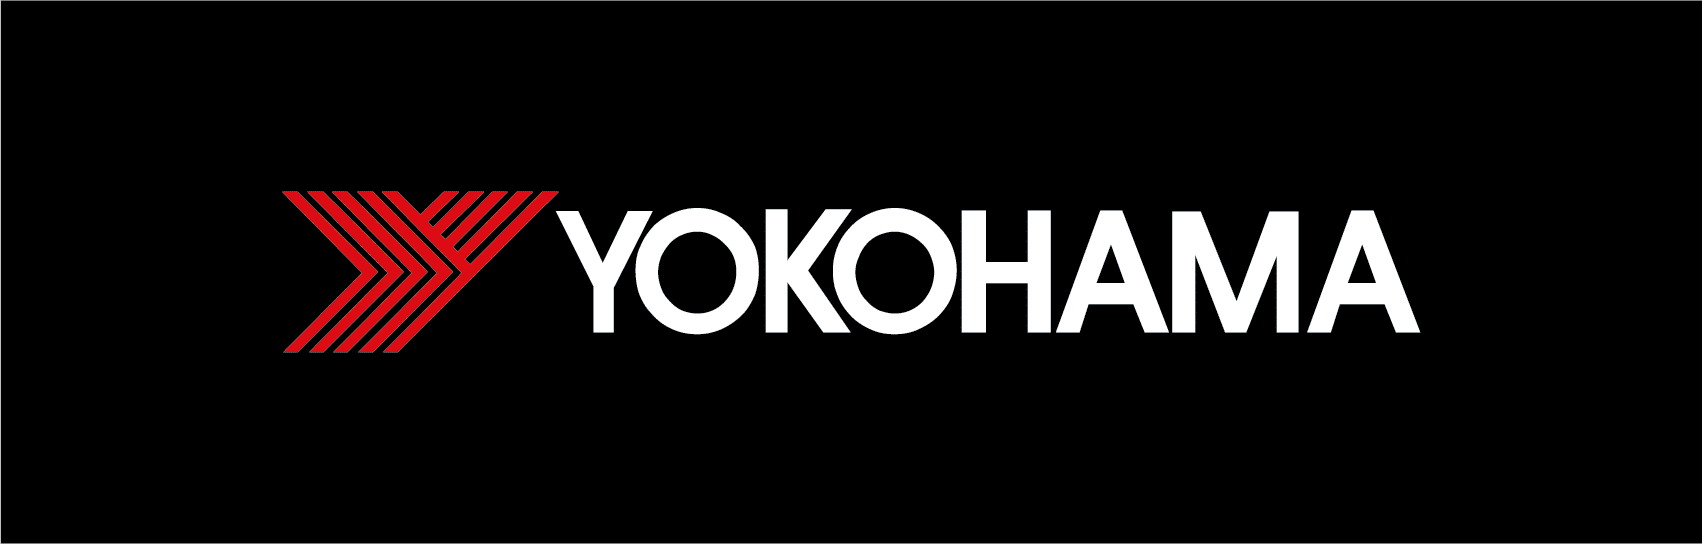 Yokohama- DekkTeam